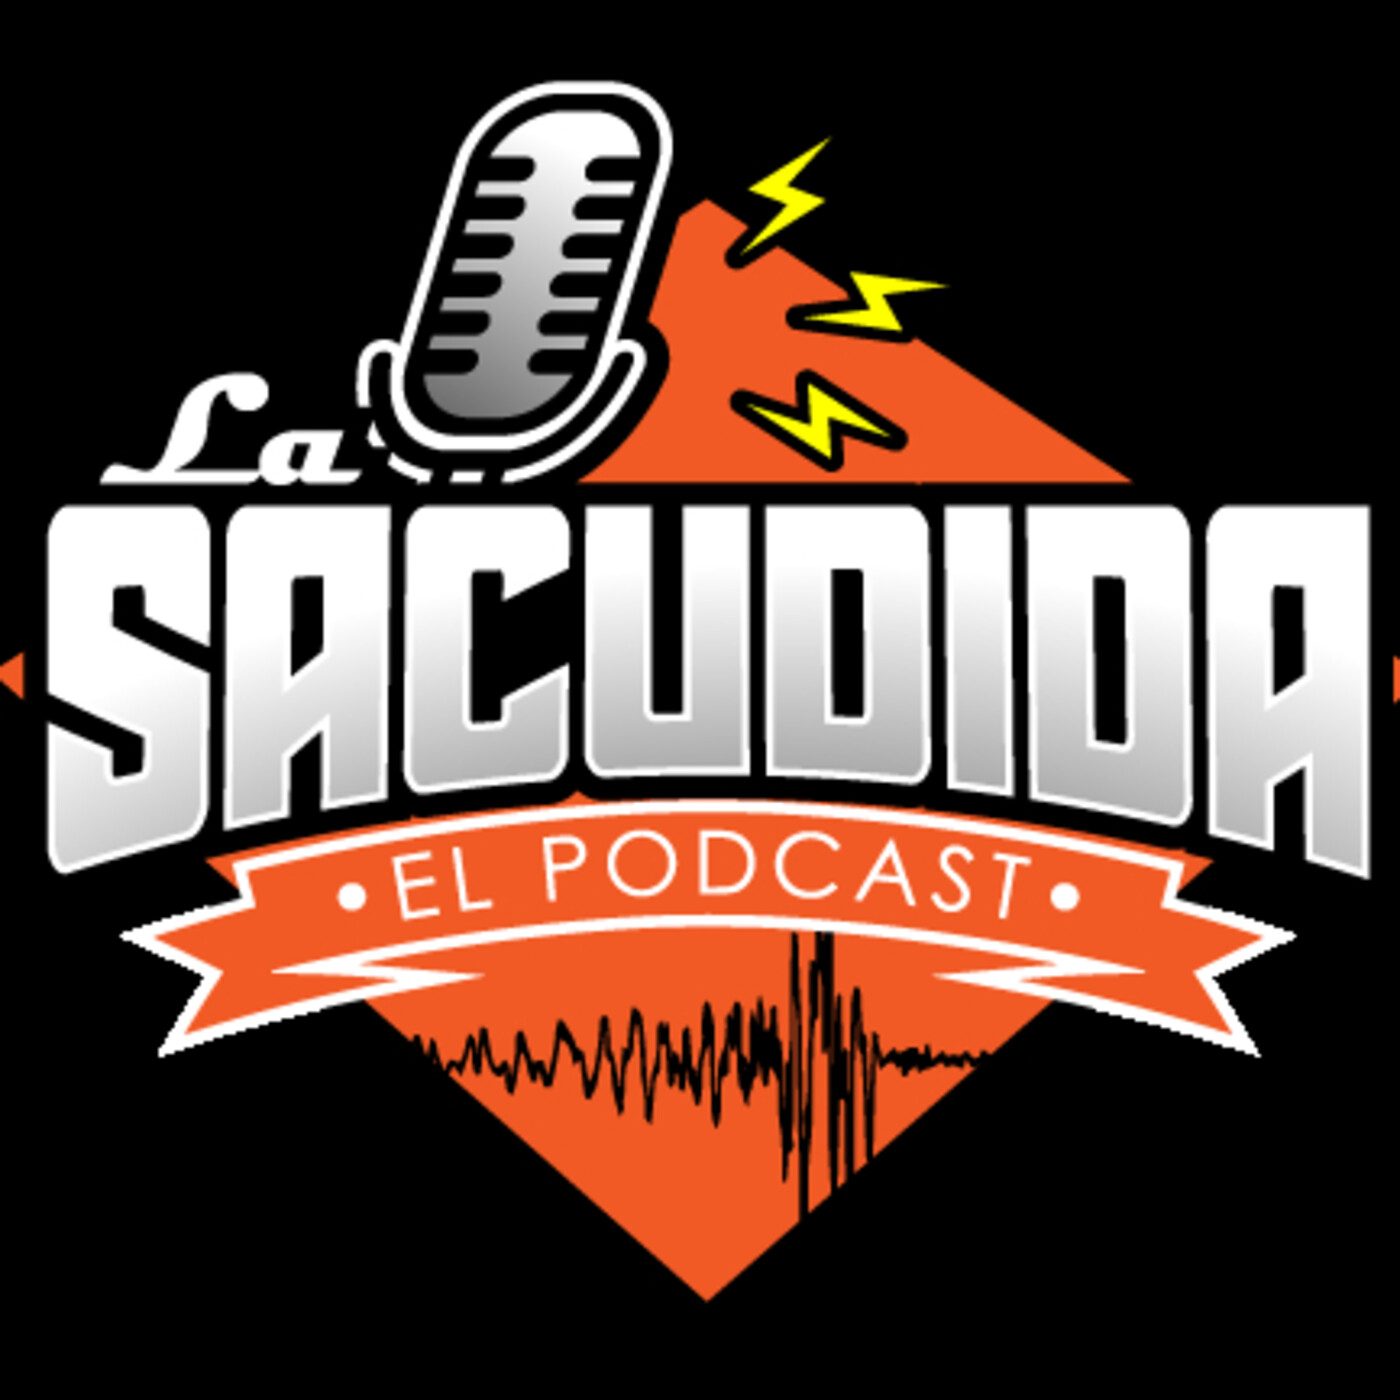 Podcast La Sacudida